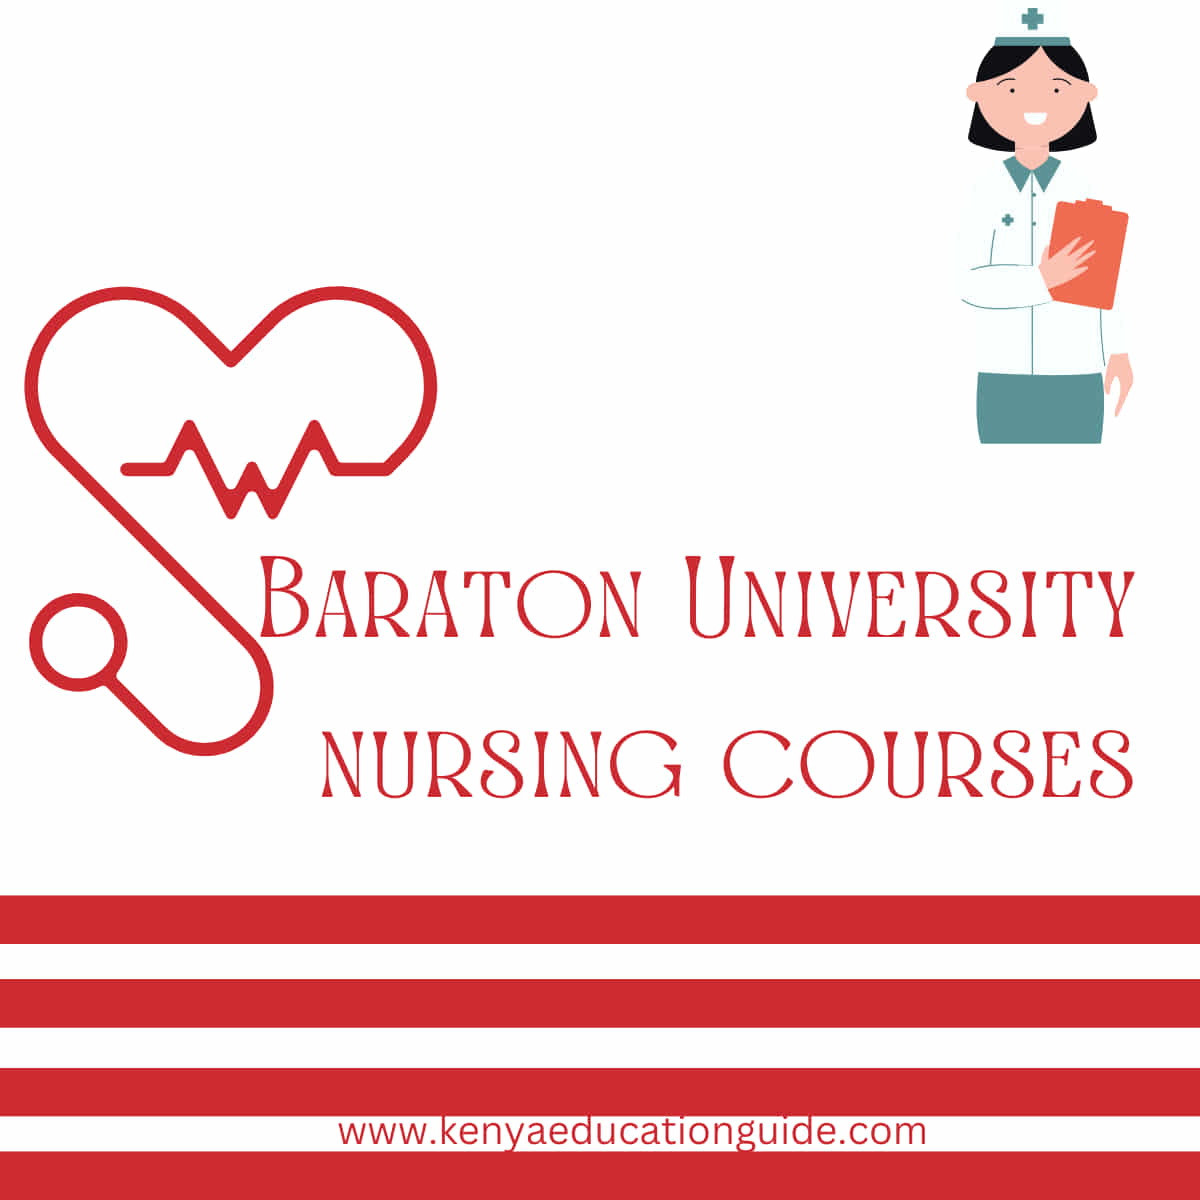 Baraton University nursing courses